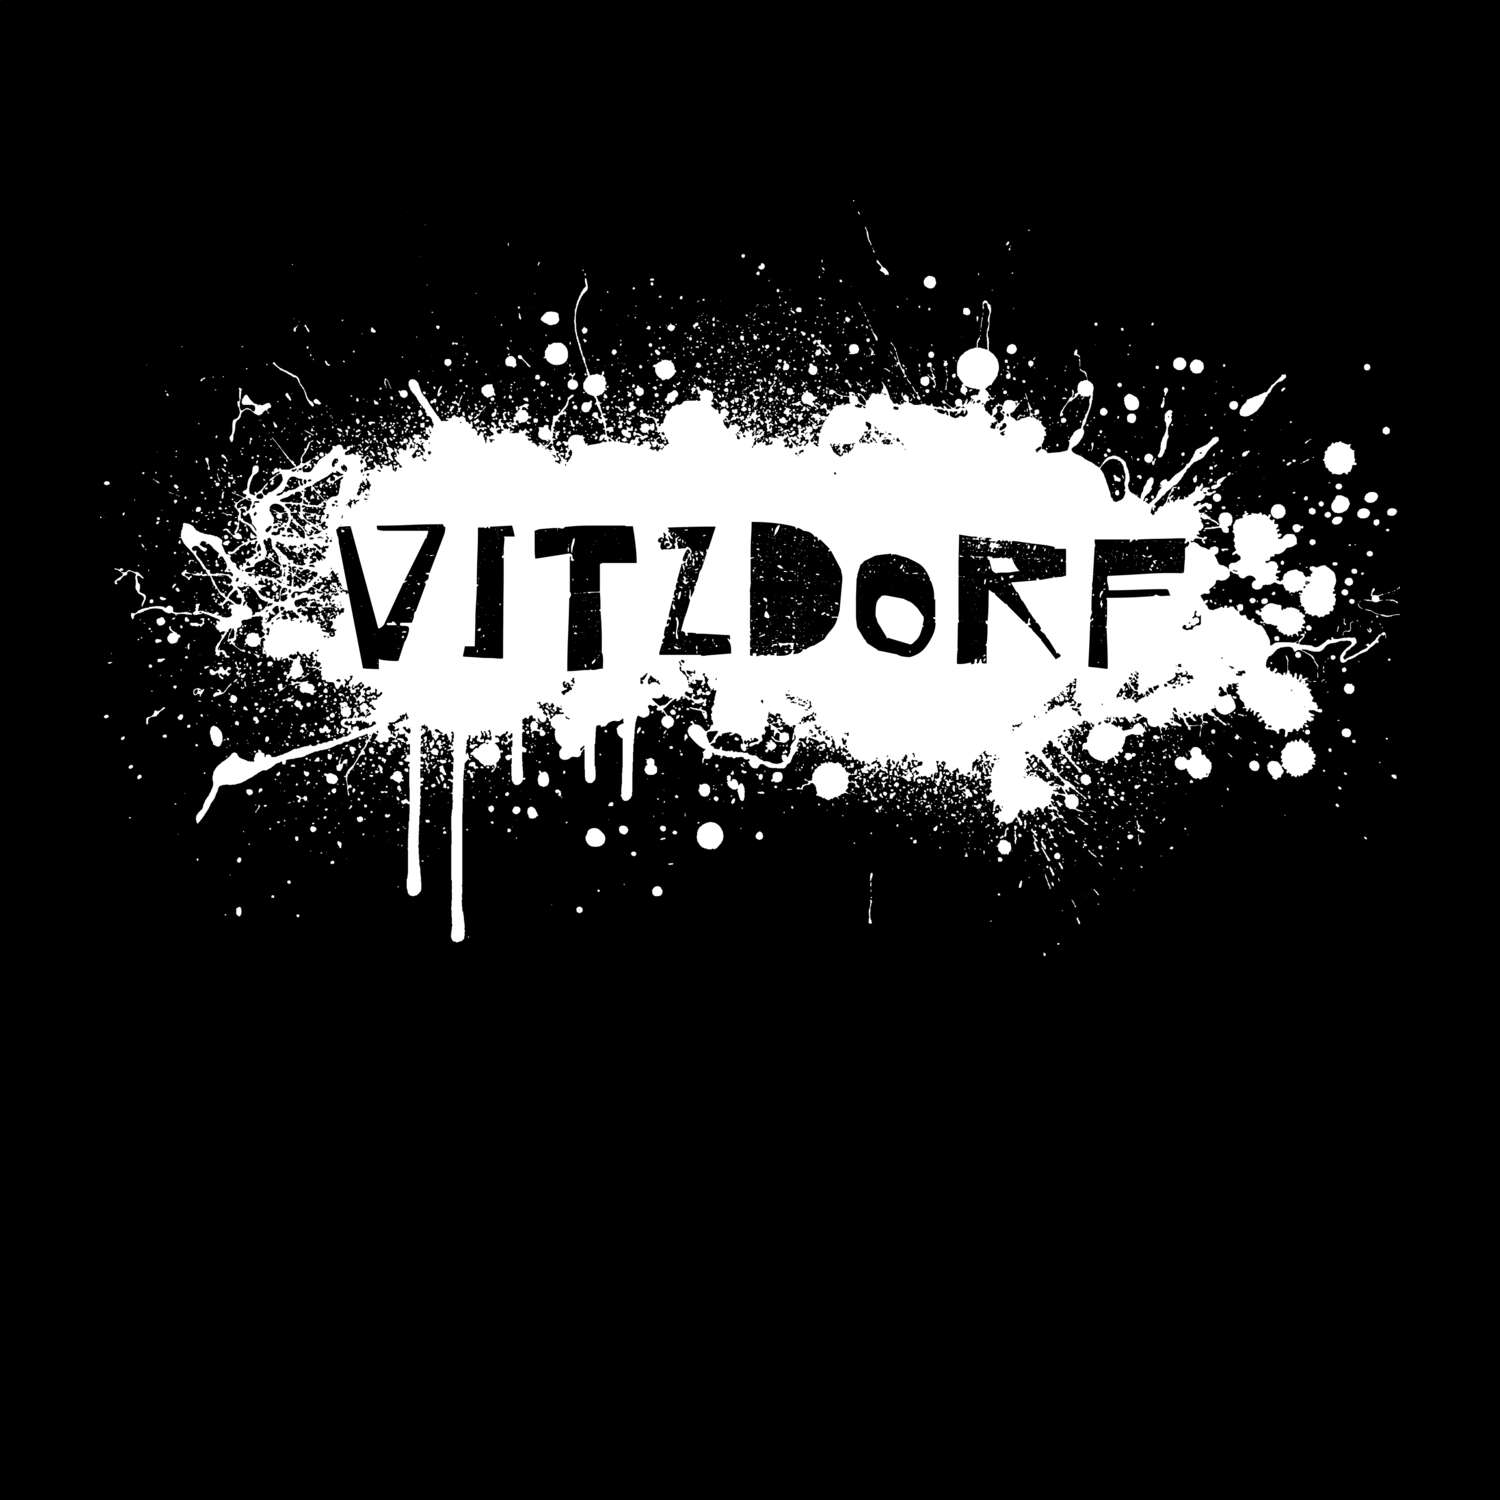 Vitzdorf T-Shirt »Paint Splash Punk«